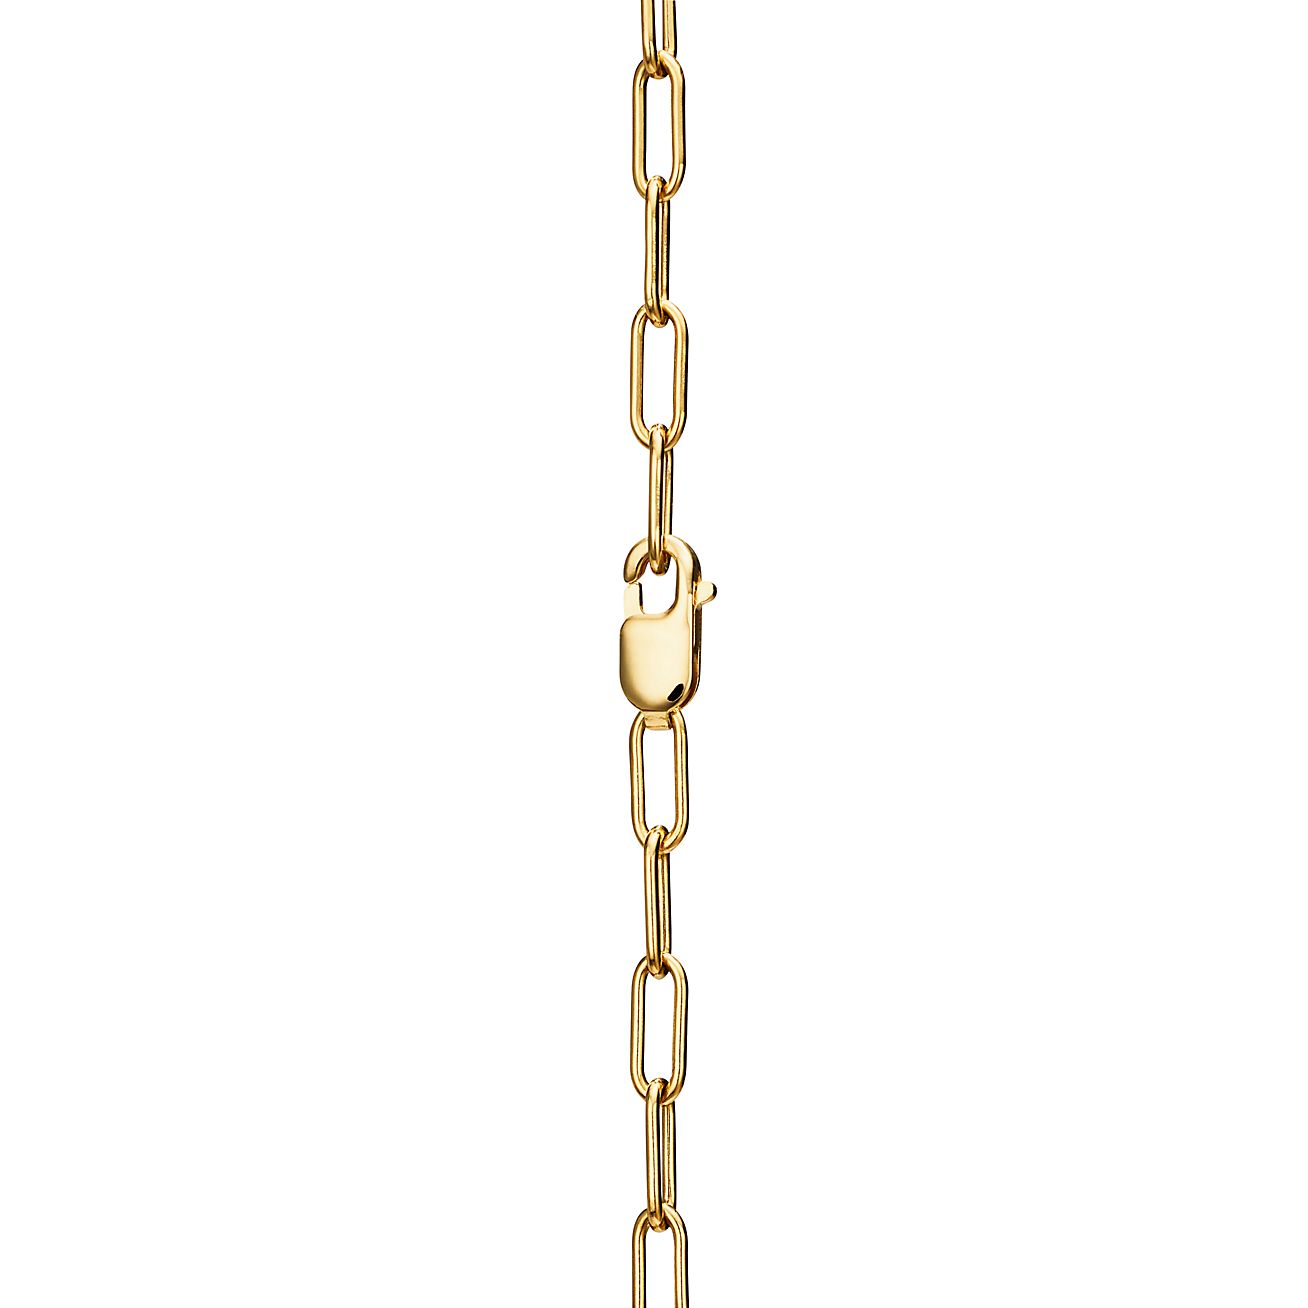 Tiffany Lock Pendant in White Gold with Pavé Diamonds